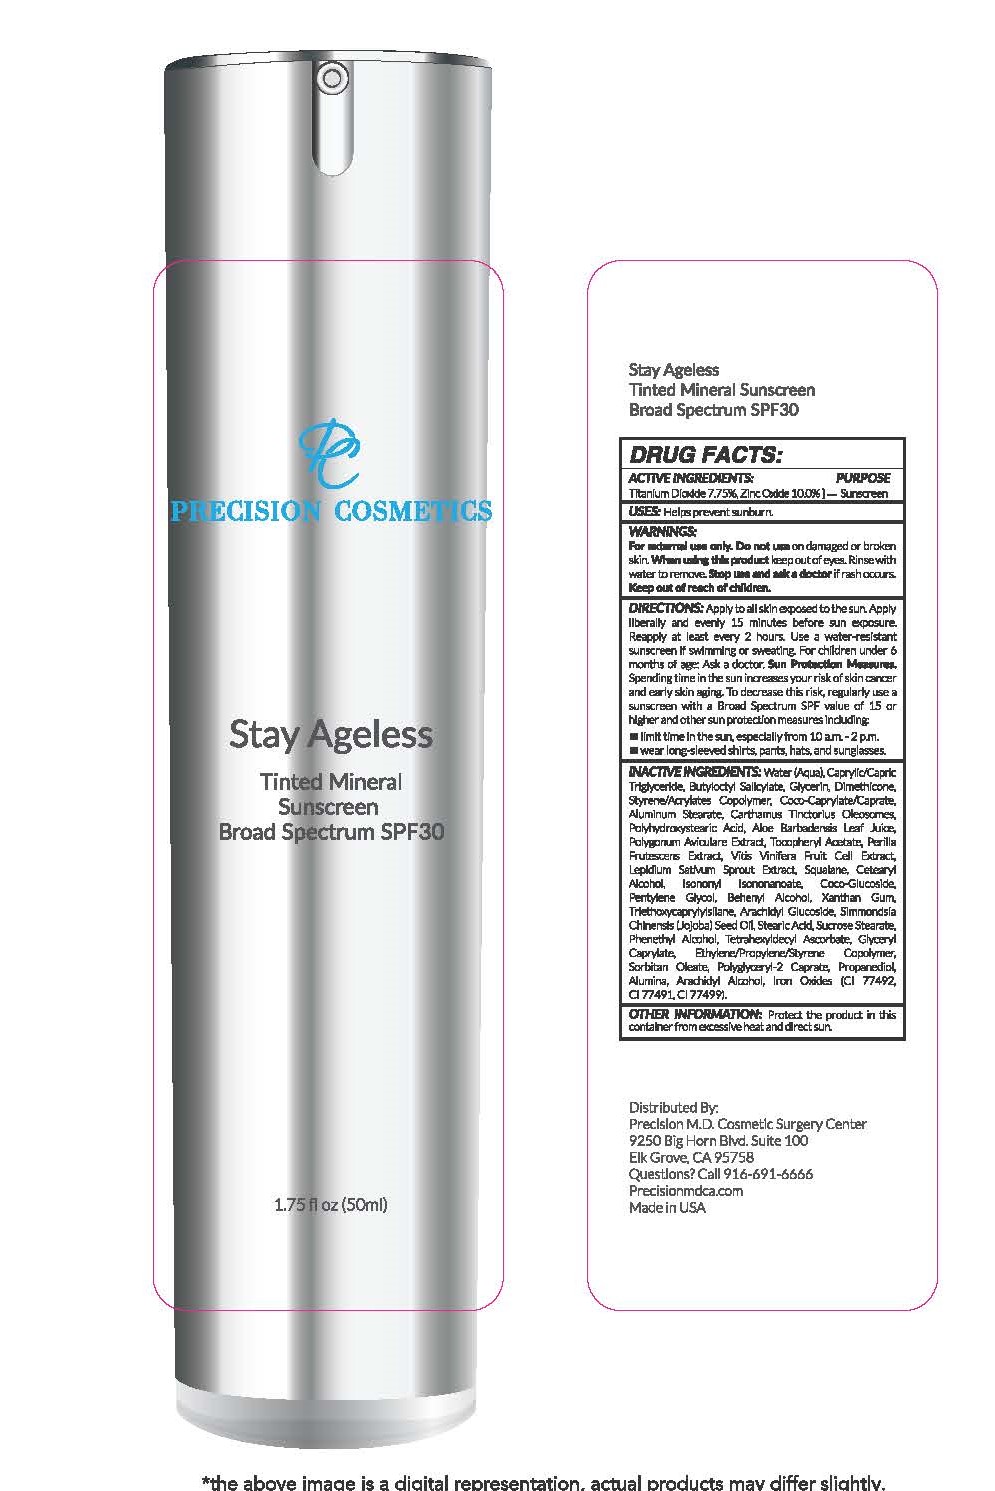 Precicson Cosmetics Stay Ageless Tinted Mineral Sunscreen Broad Spectrum SPF 30 1.75 fl oz (50ml)